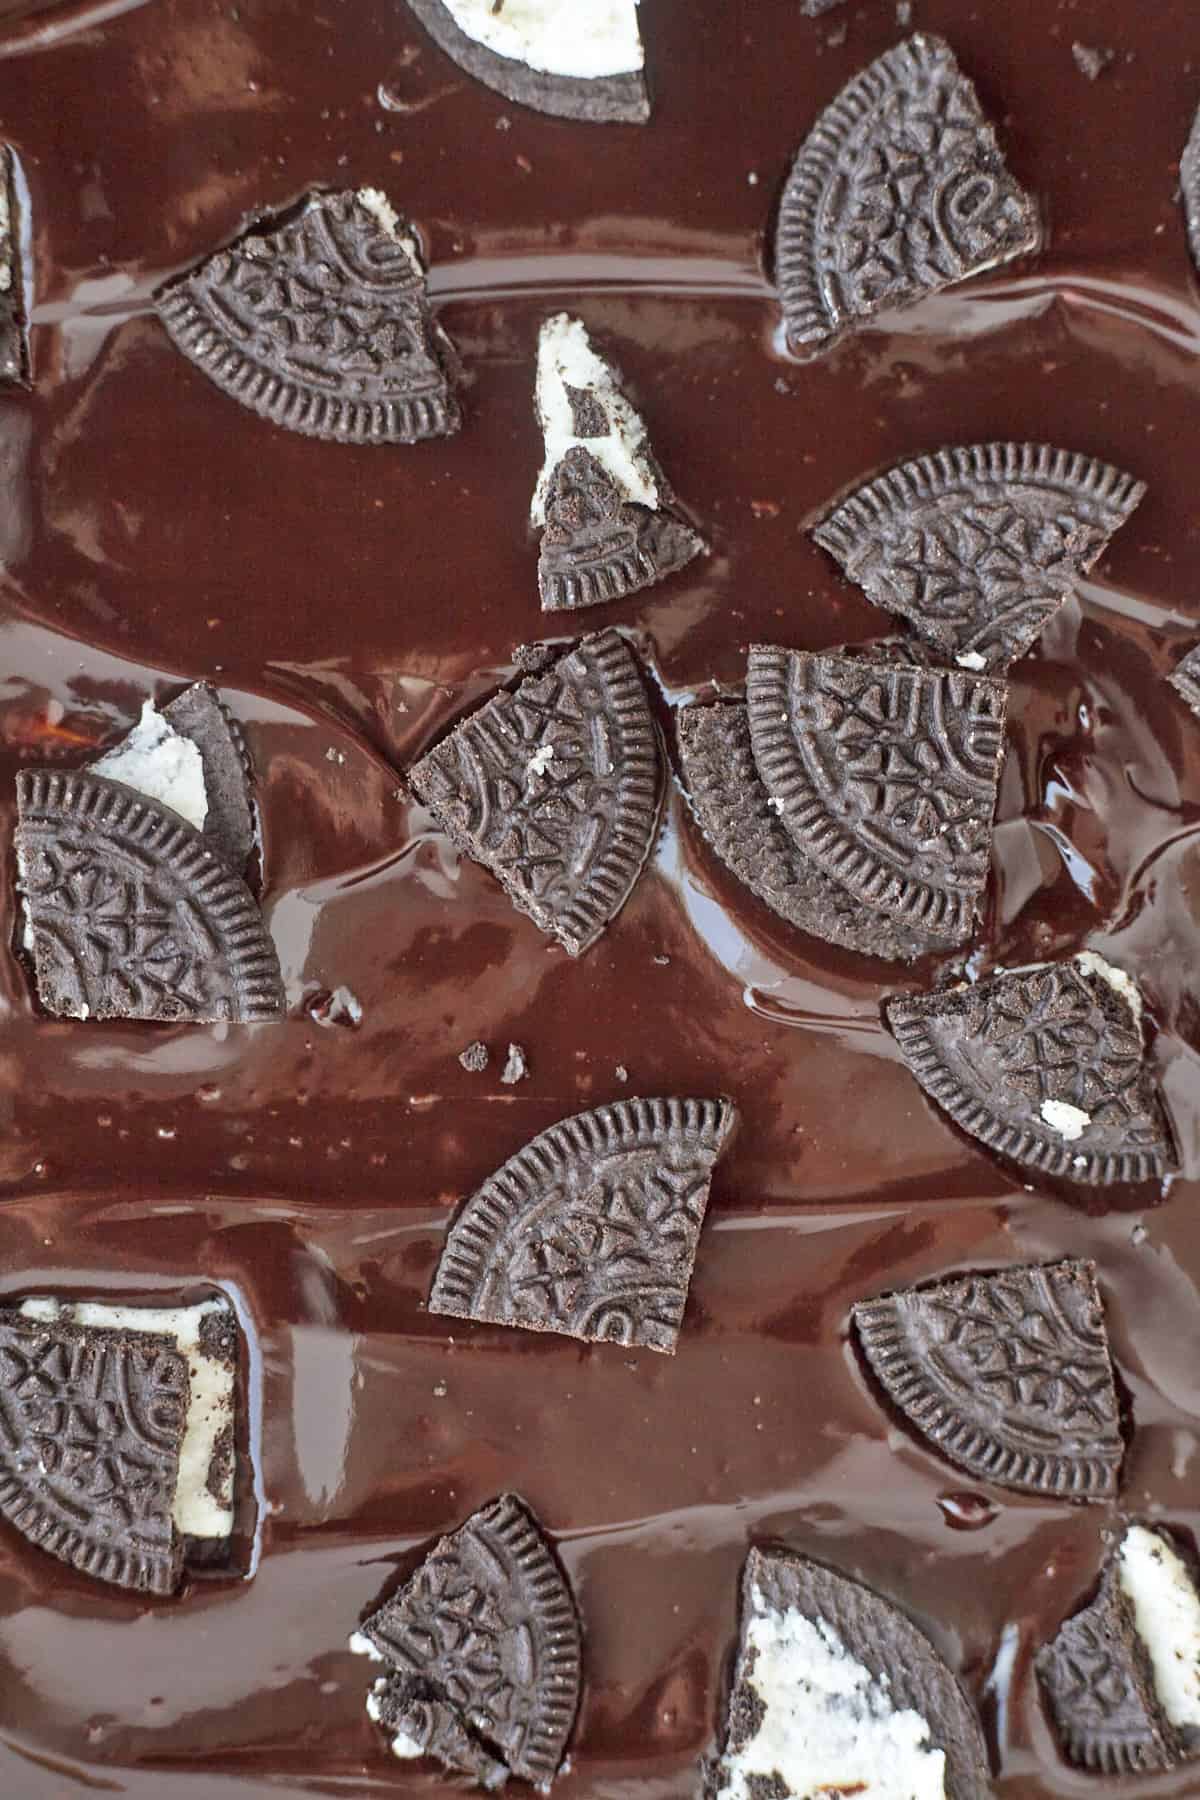 Oreo pieces on top of chocolate ganache